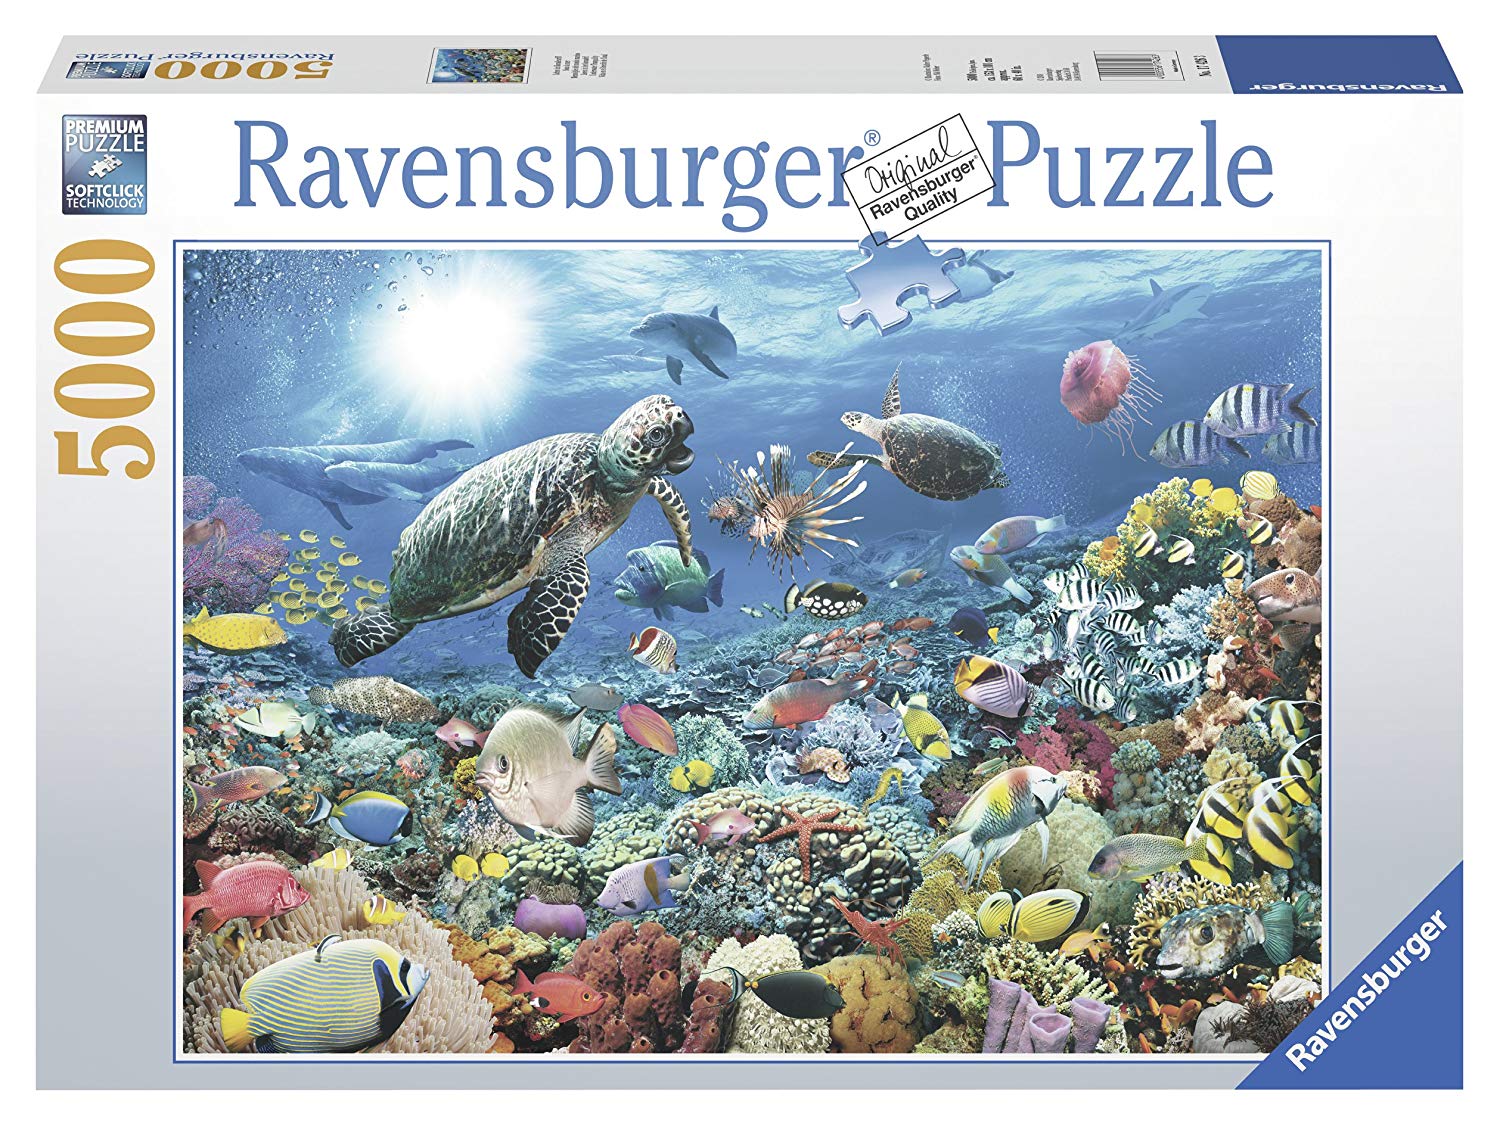 Ravensburger Beneath The Sea Piece Puzzle